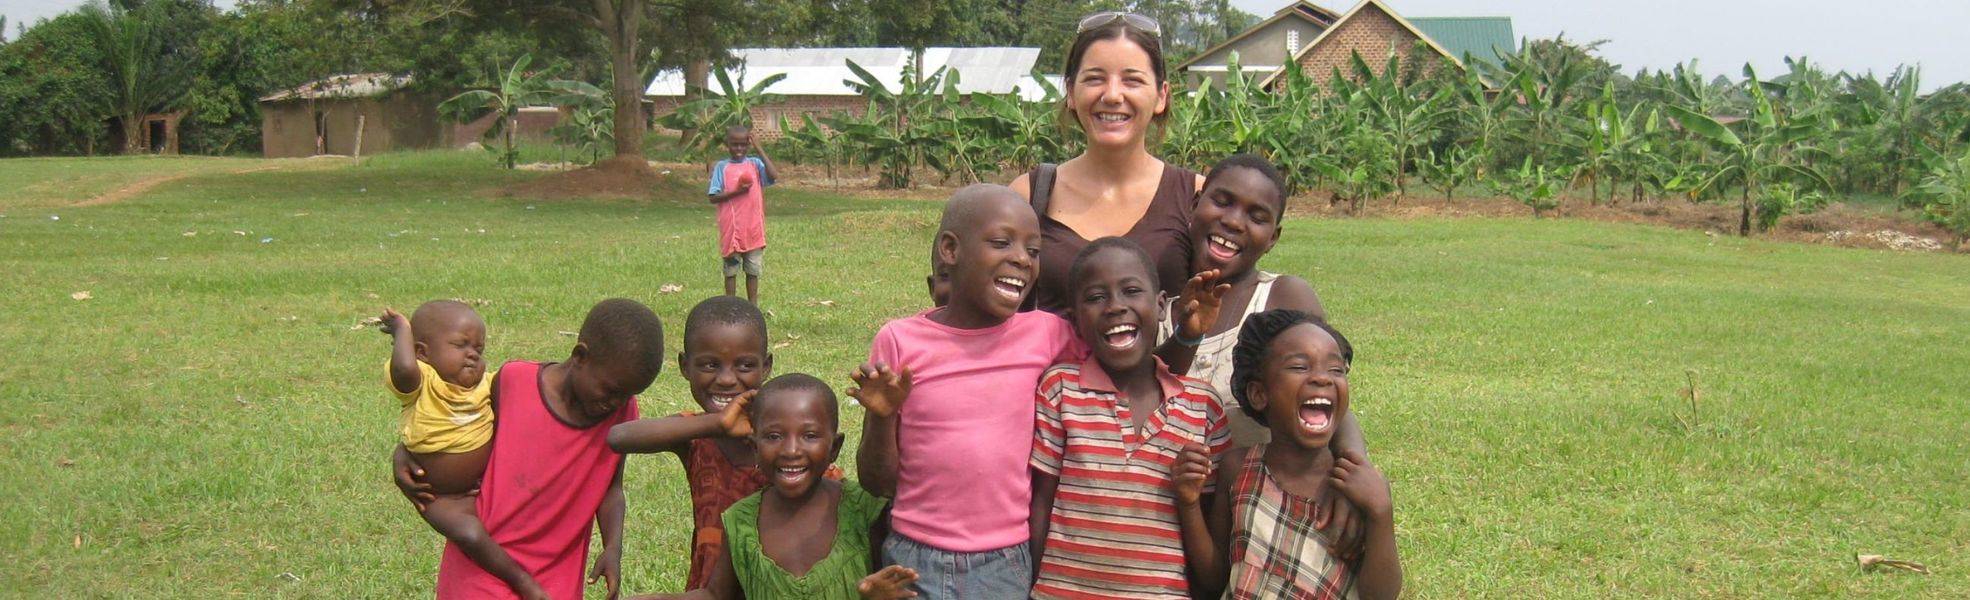 Volunteer on an internship abroad in Uganda with children